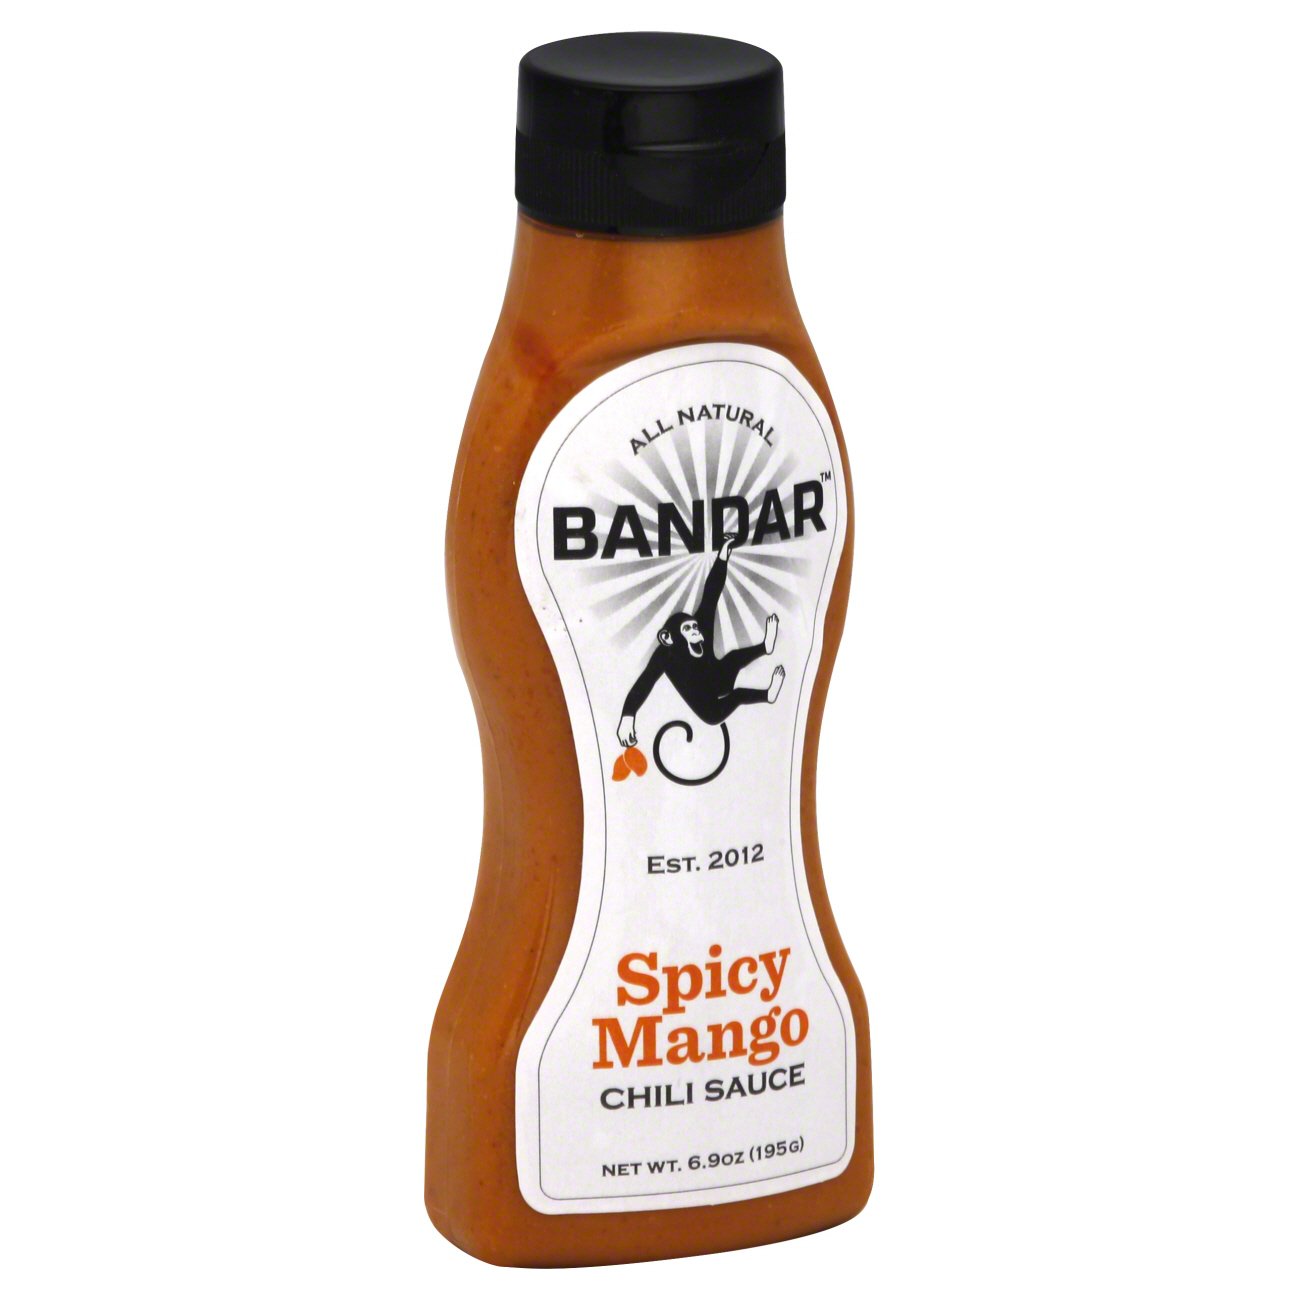 Bandar Spicy Mango Chili Sauce - Shop Condiments at H-E-B